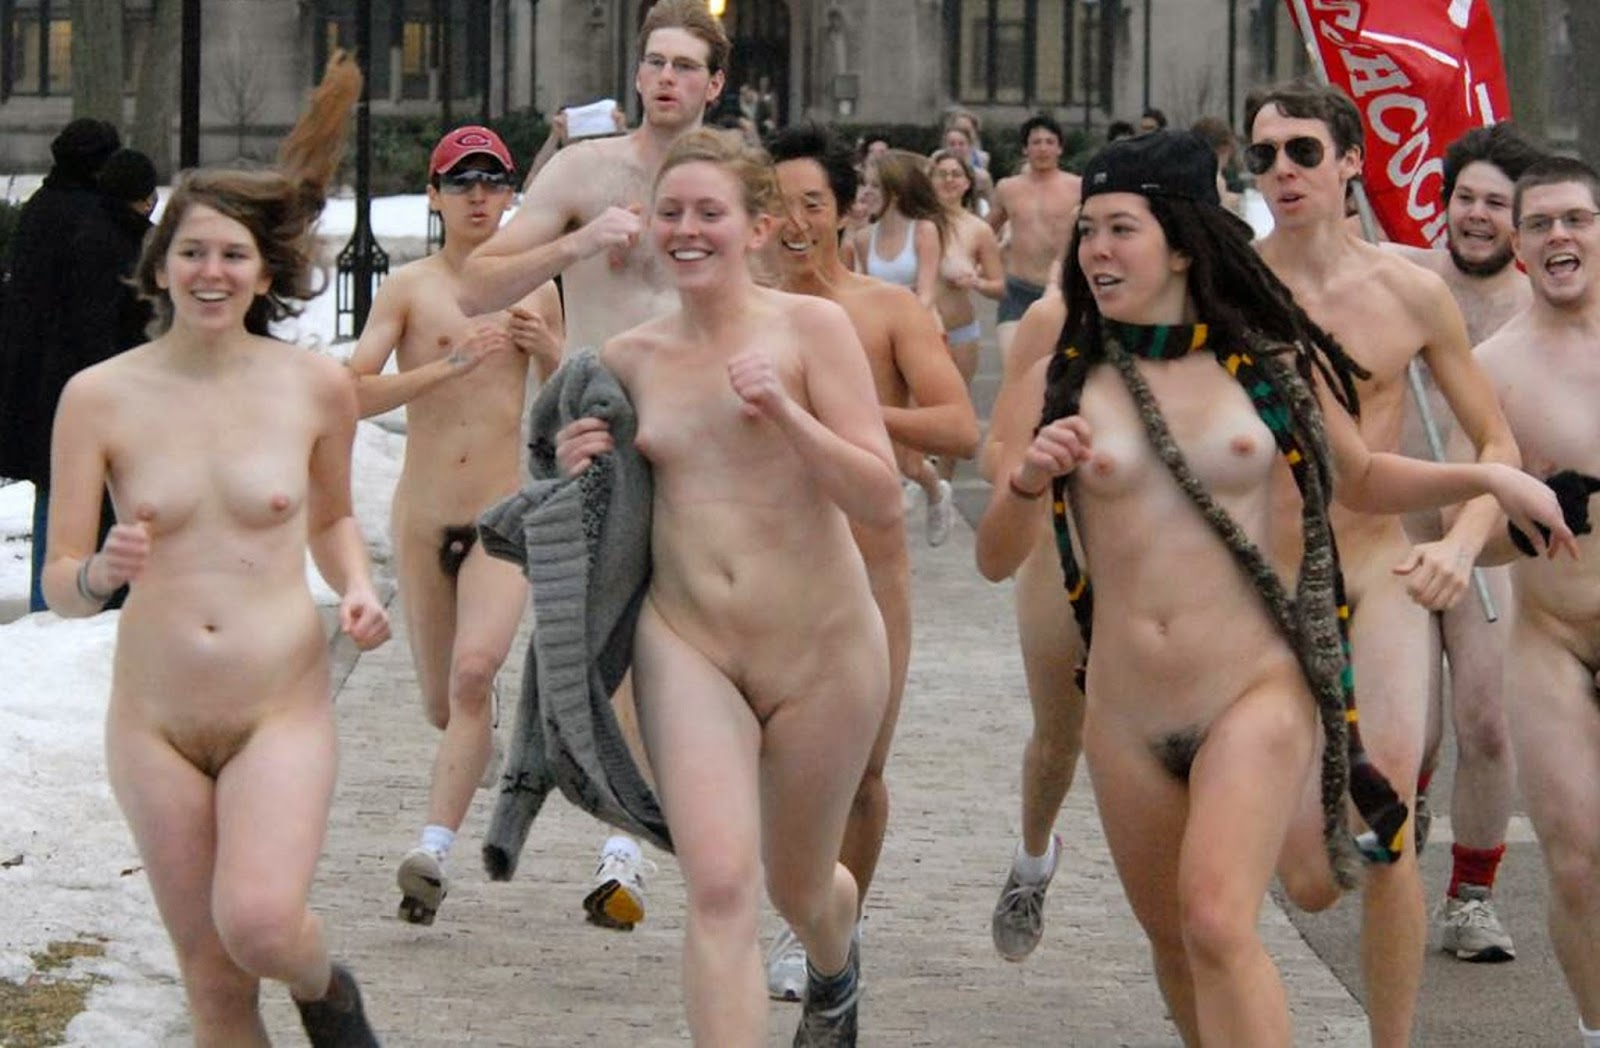 Rosario gallardo flash mob nude best adult free xxx pic